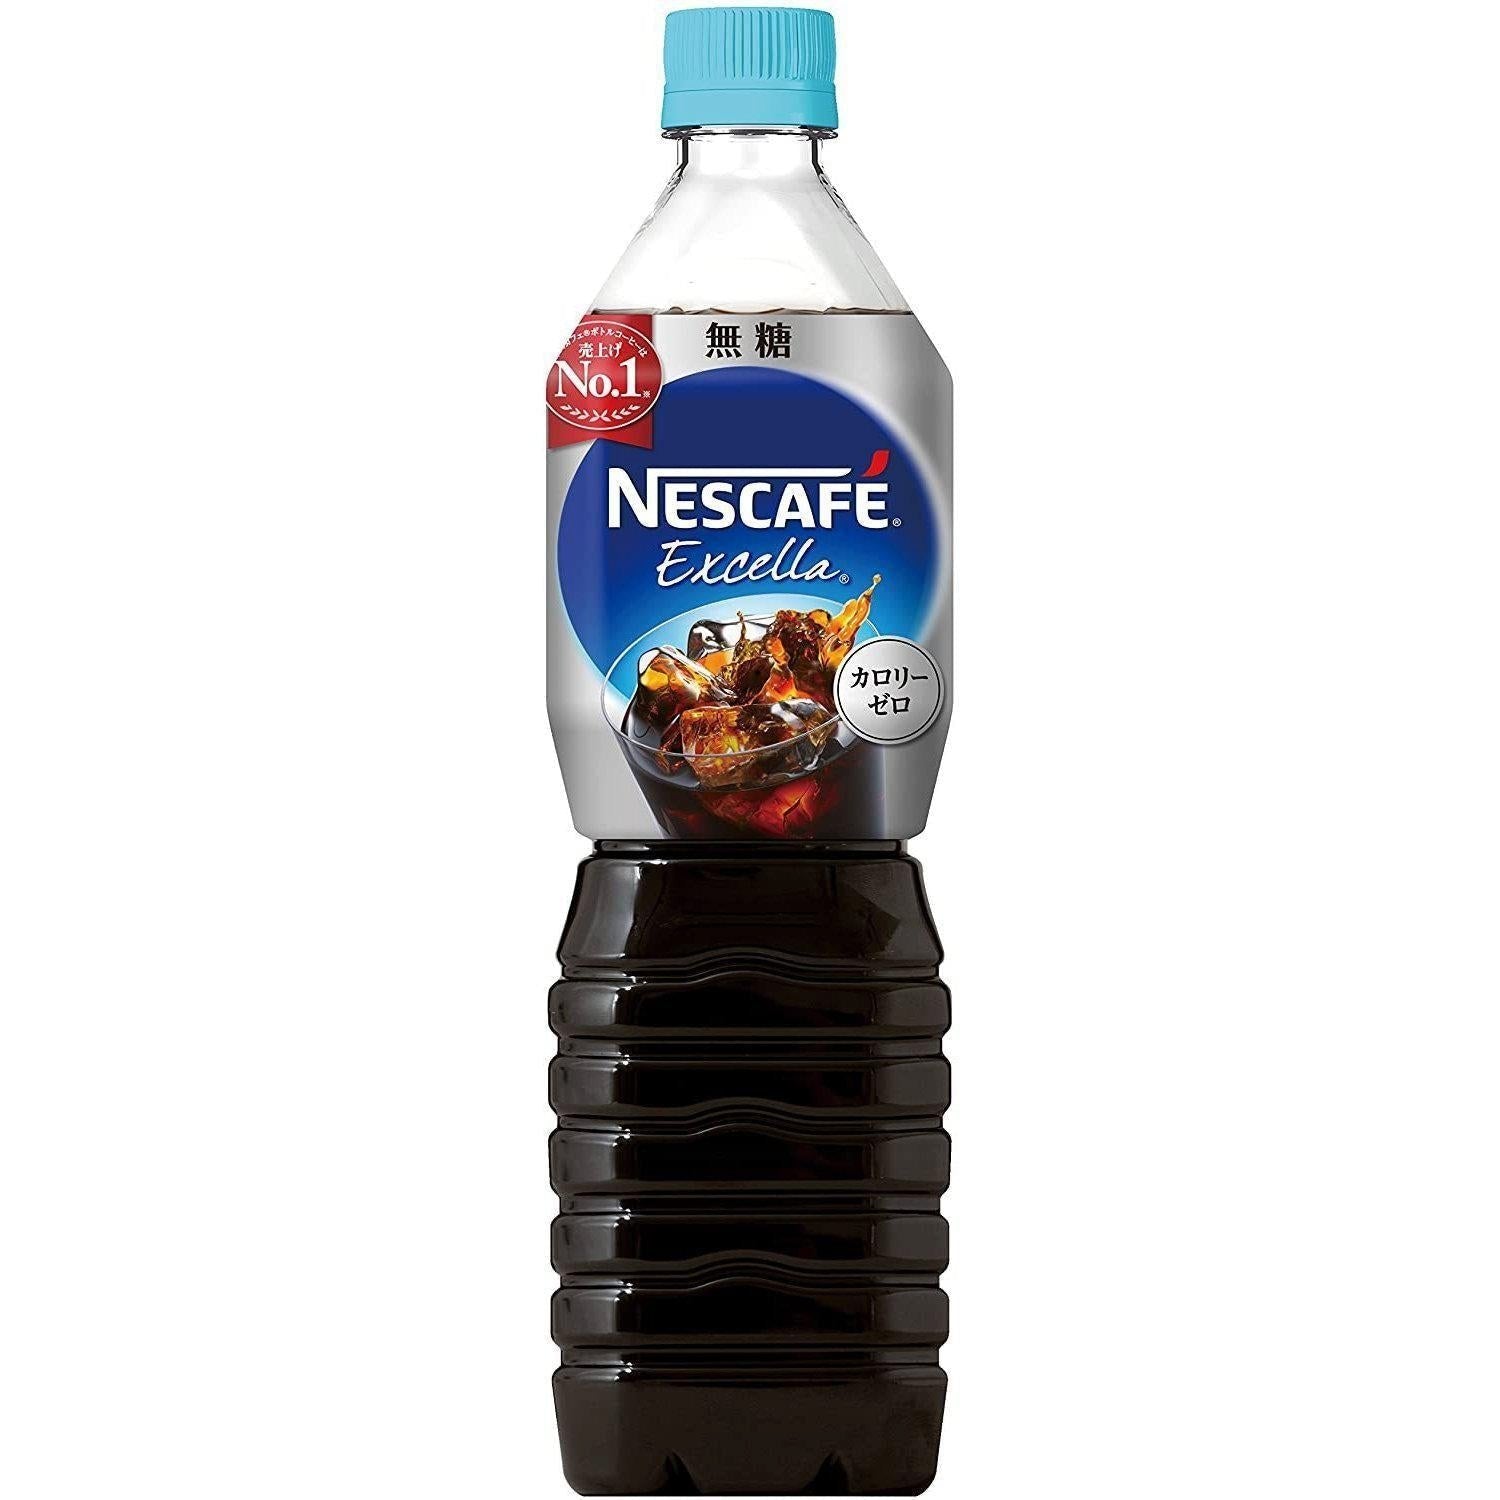 Nestlé Nescafé Excella Sugar-free Black Coffee Bottle 900ml x 3 Bottles